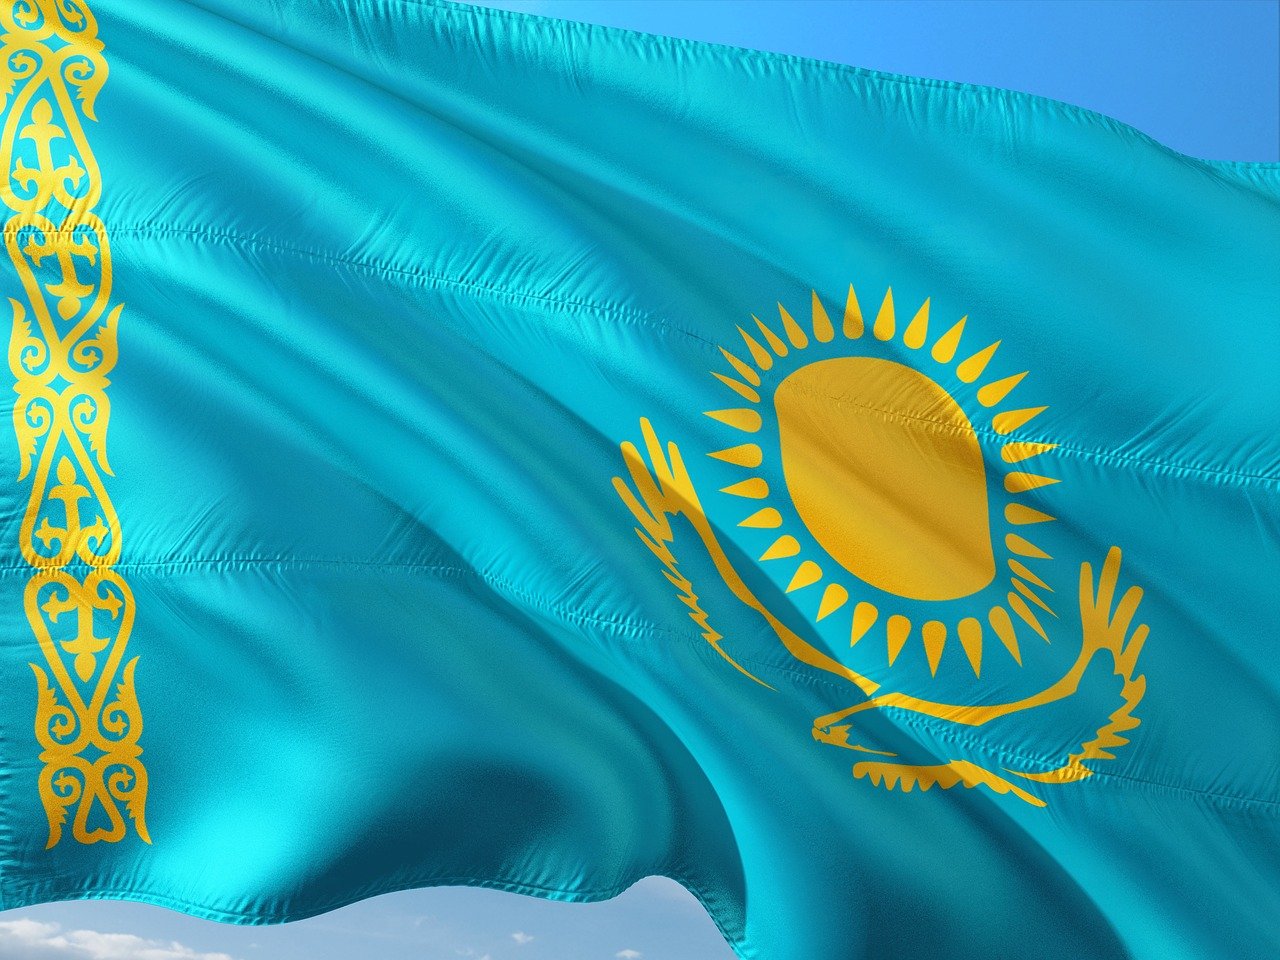 Kazakhstan detains former national security head over suspicion of treason